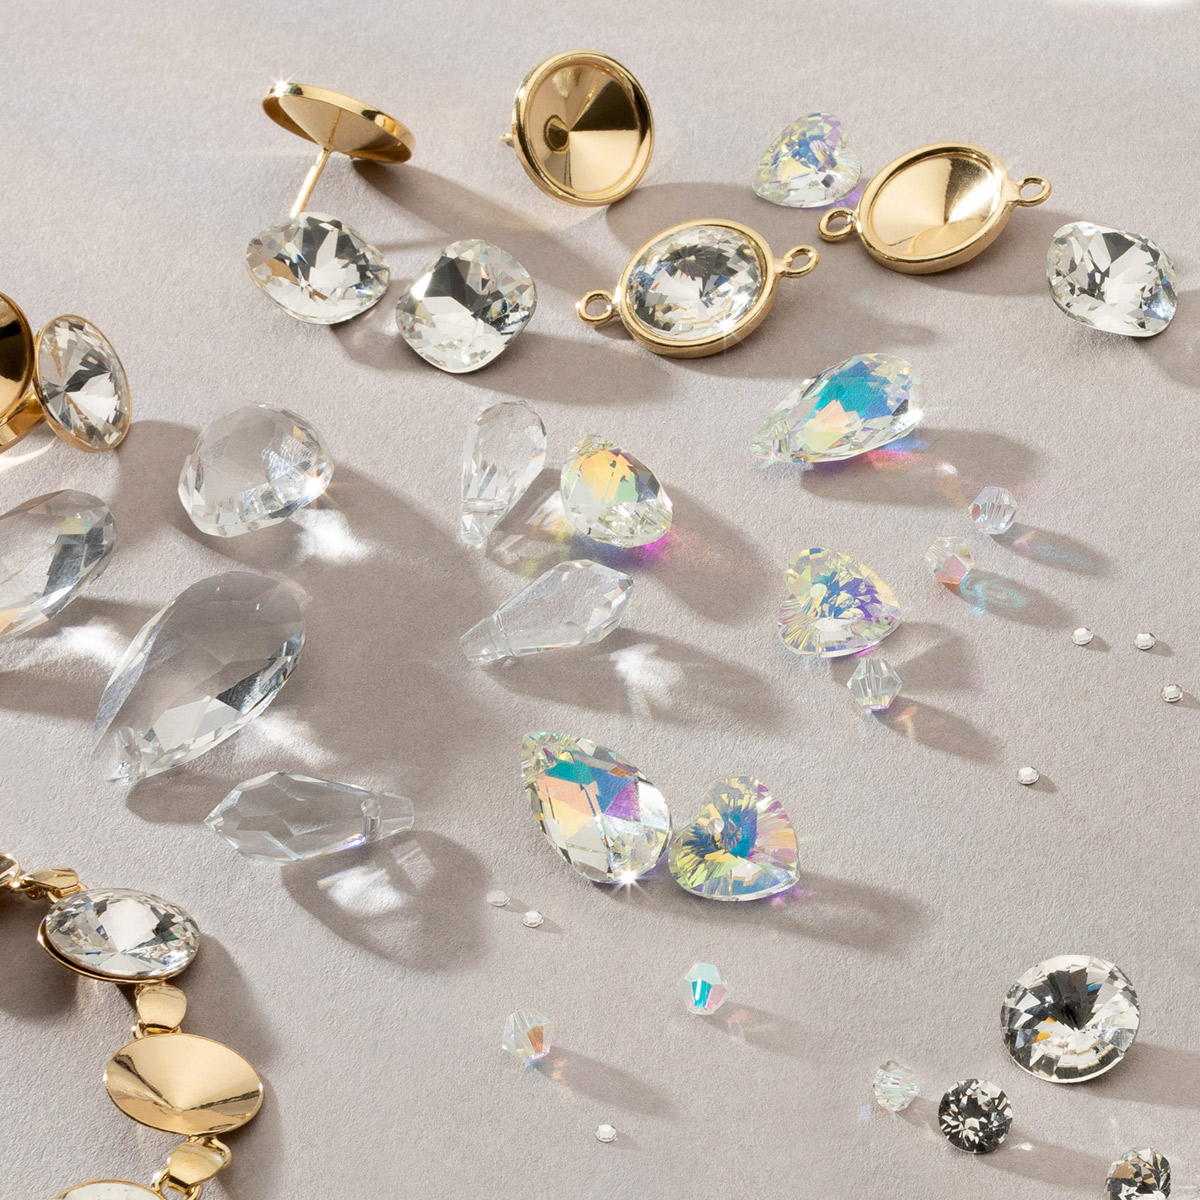 GAVBARI jewelry crystals